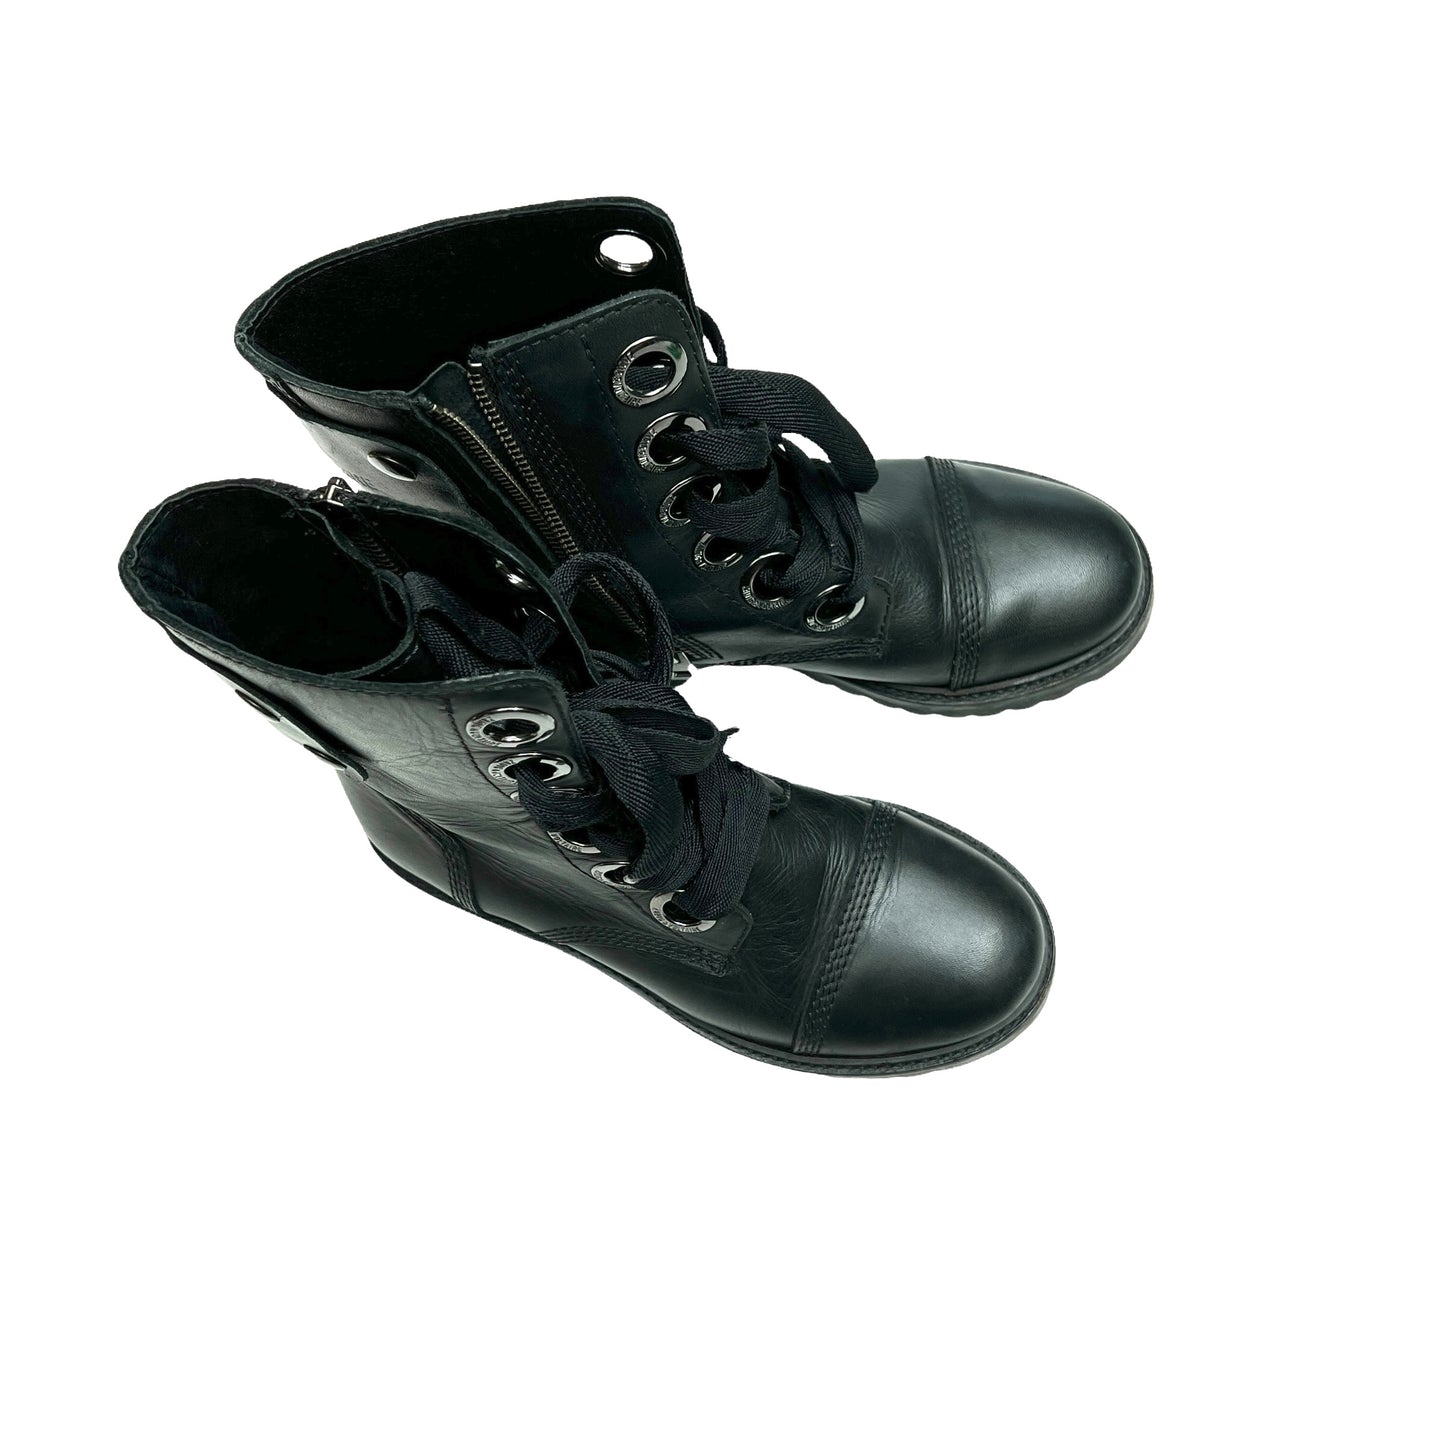 Black Combat Leather Boots - 7